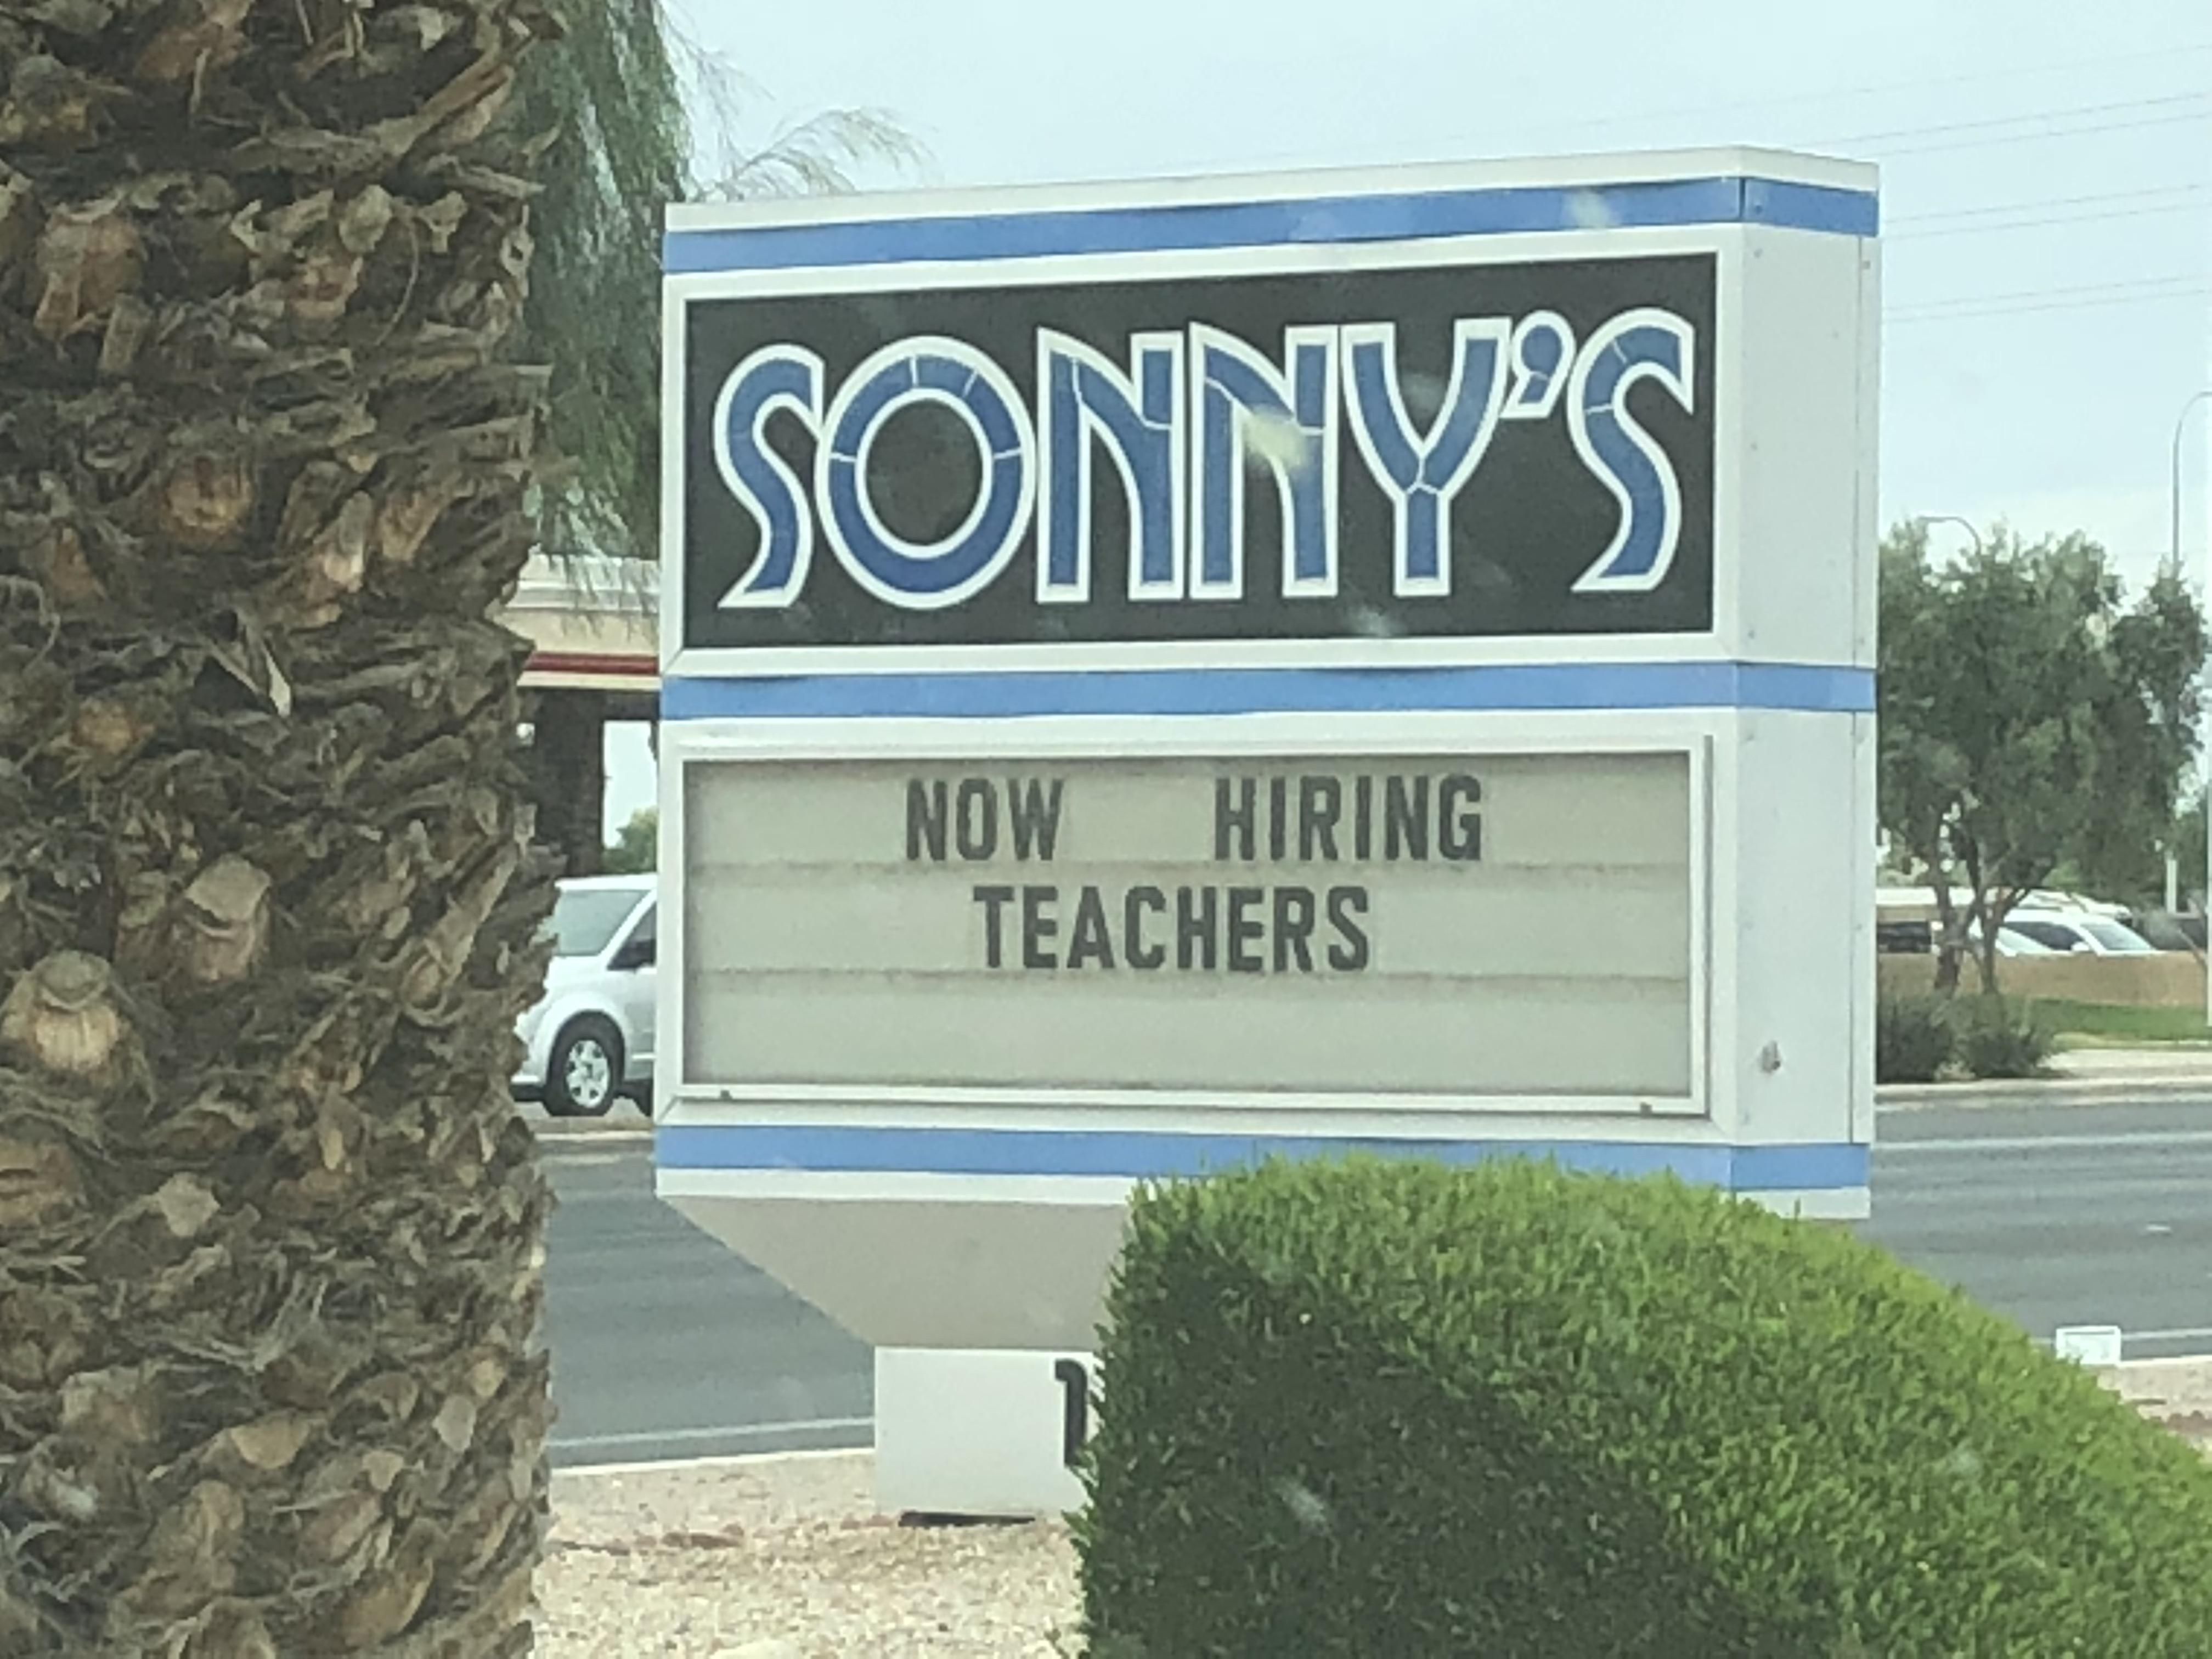 Teachers in Arizona on strike? The local strip club has got you covered!